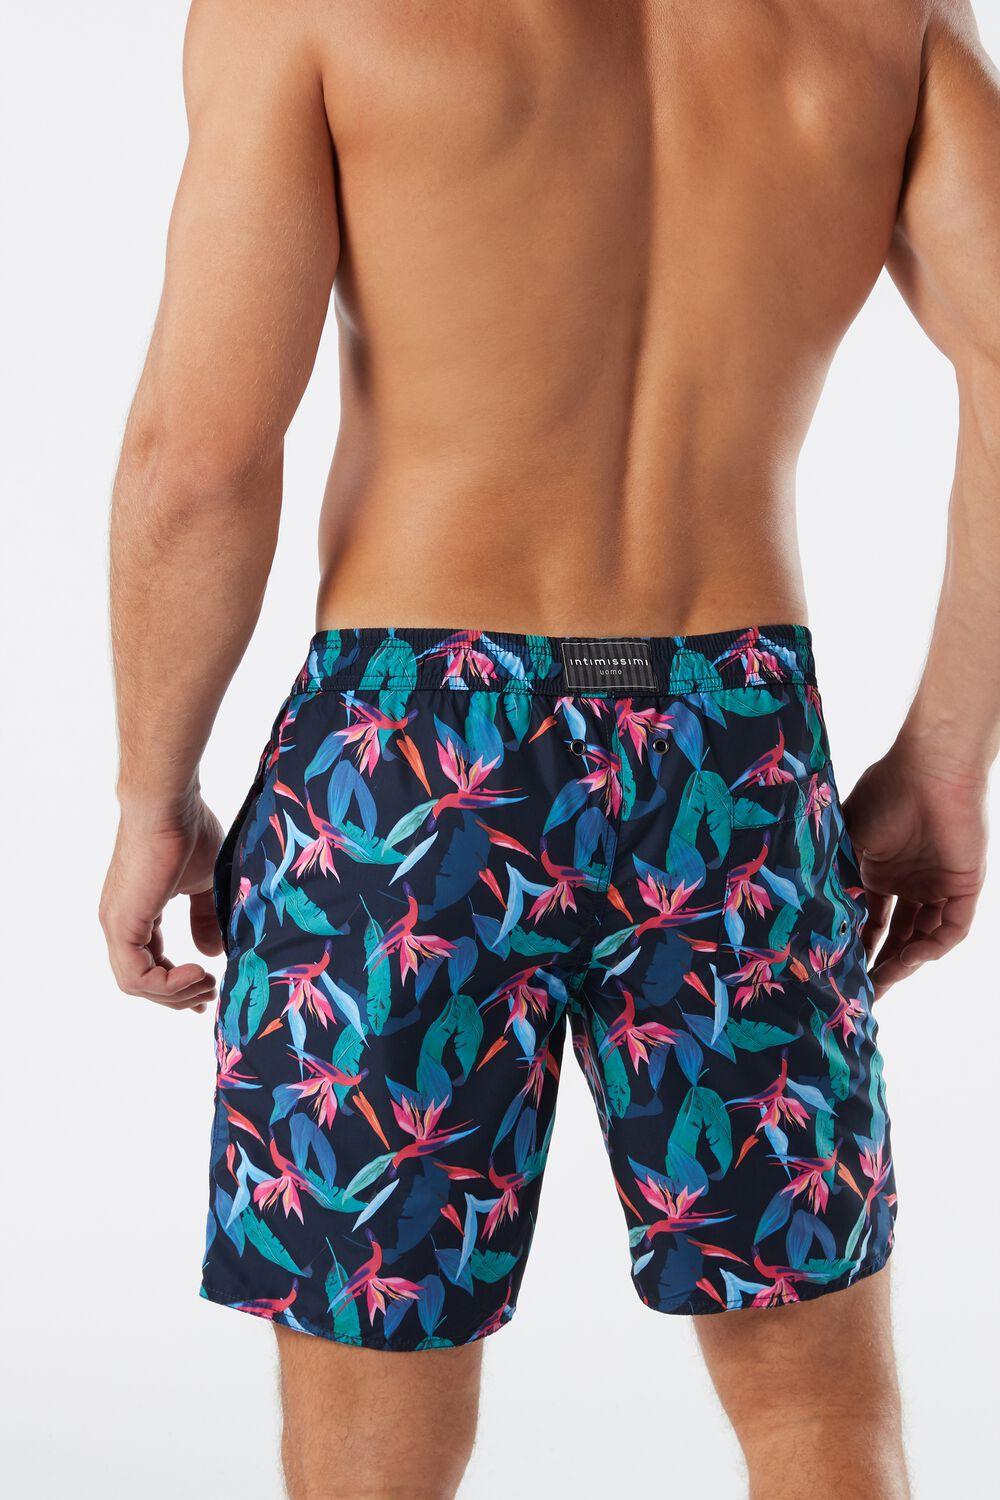 Intimissimi Leaf Print Long Swim Shorts in Blue for Men - Lyst